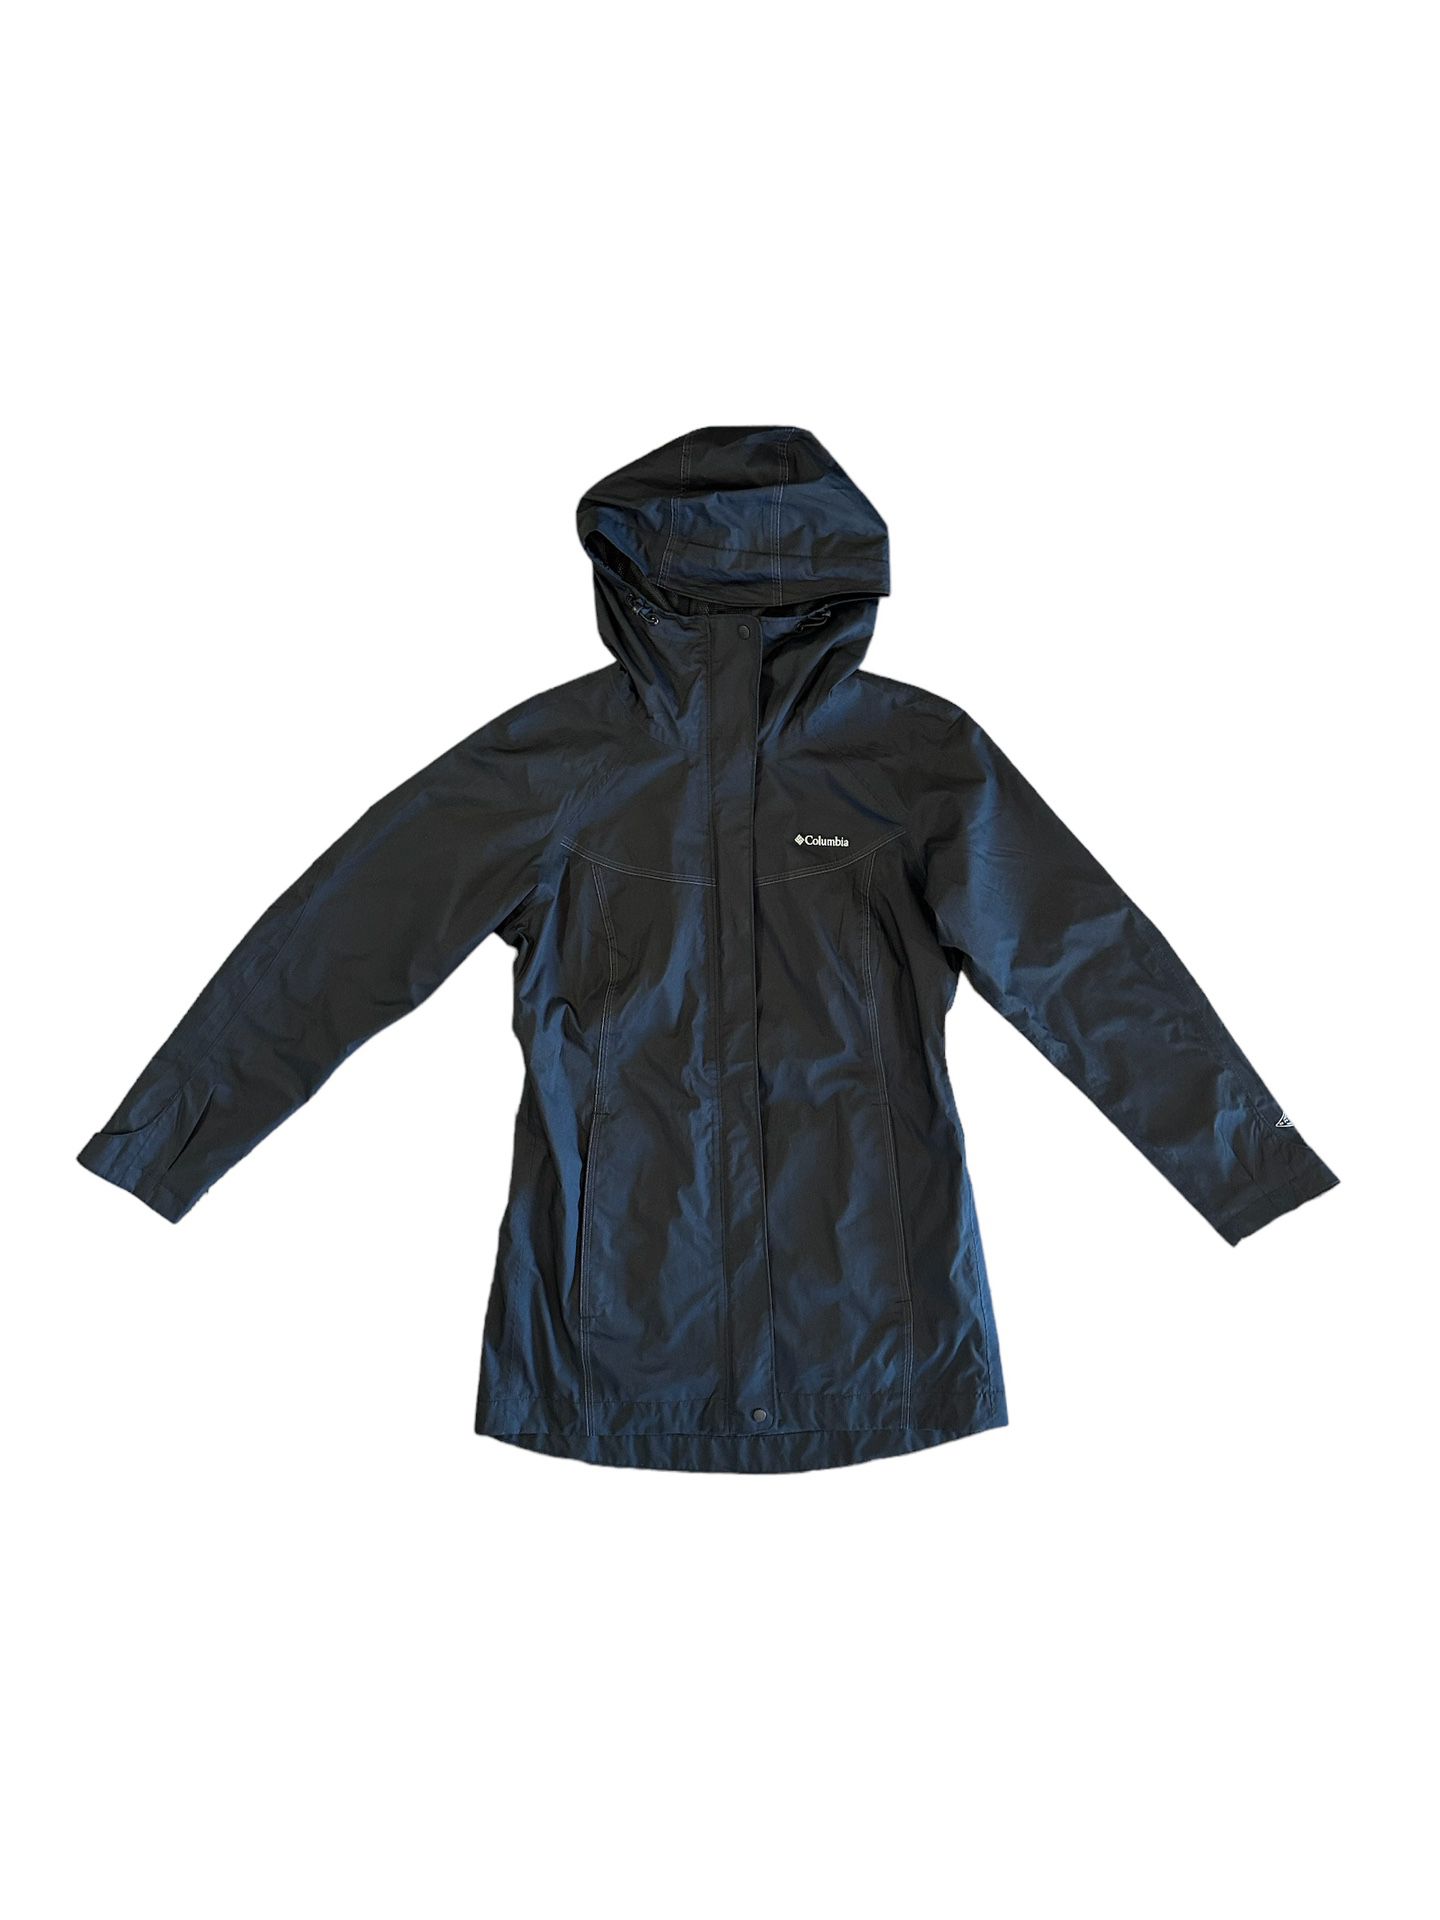 Columbia Omni Tech Women’s Black Jacket Hooded Waterproof Breathable Size Small